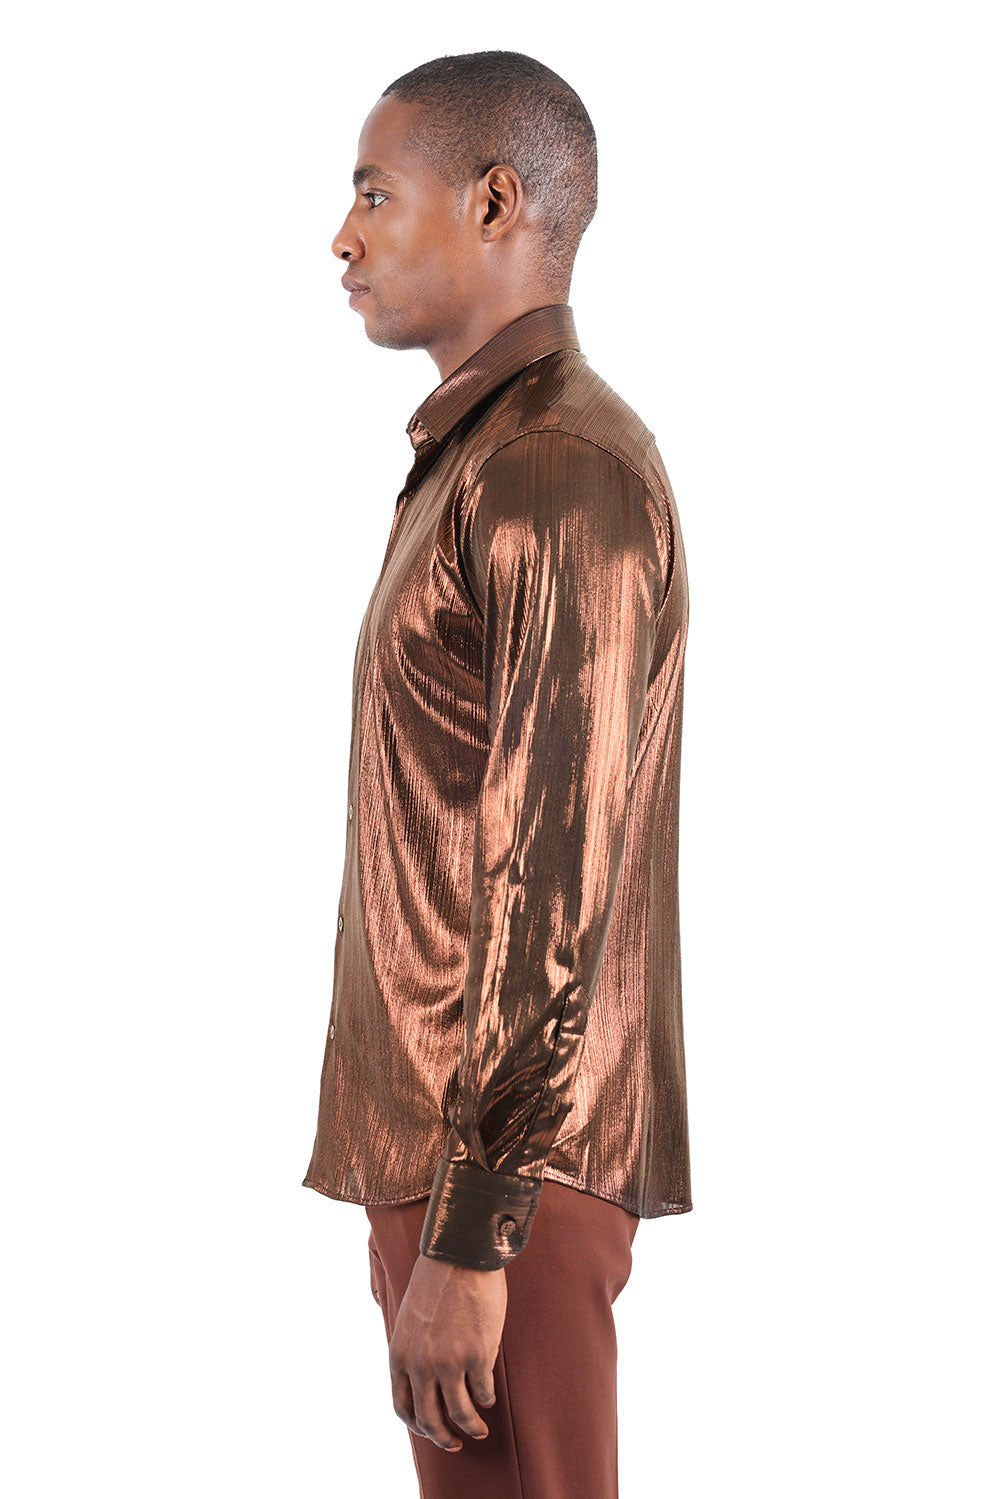 BARABAS Men's Premium Shinny Solid Color Button Down Dress Shirts B46 Bronze